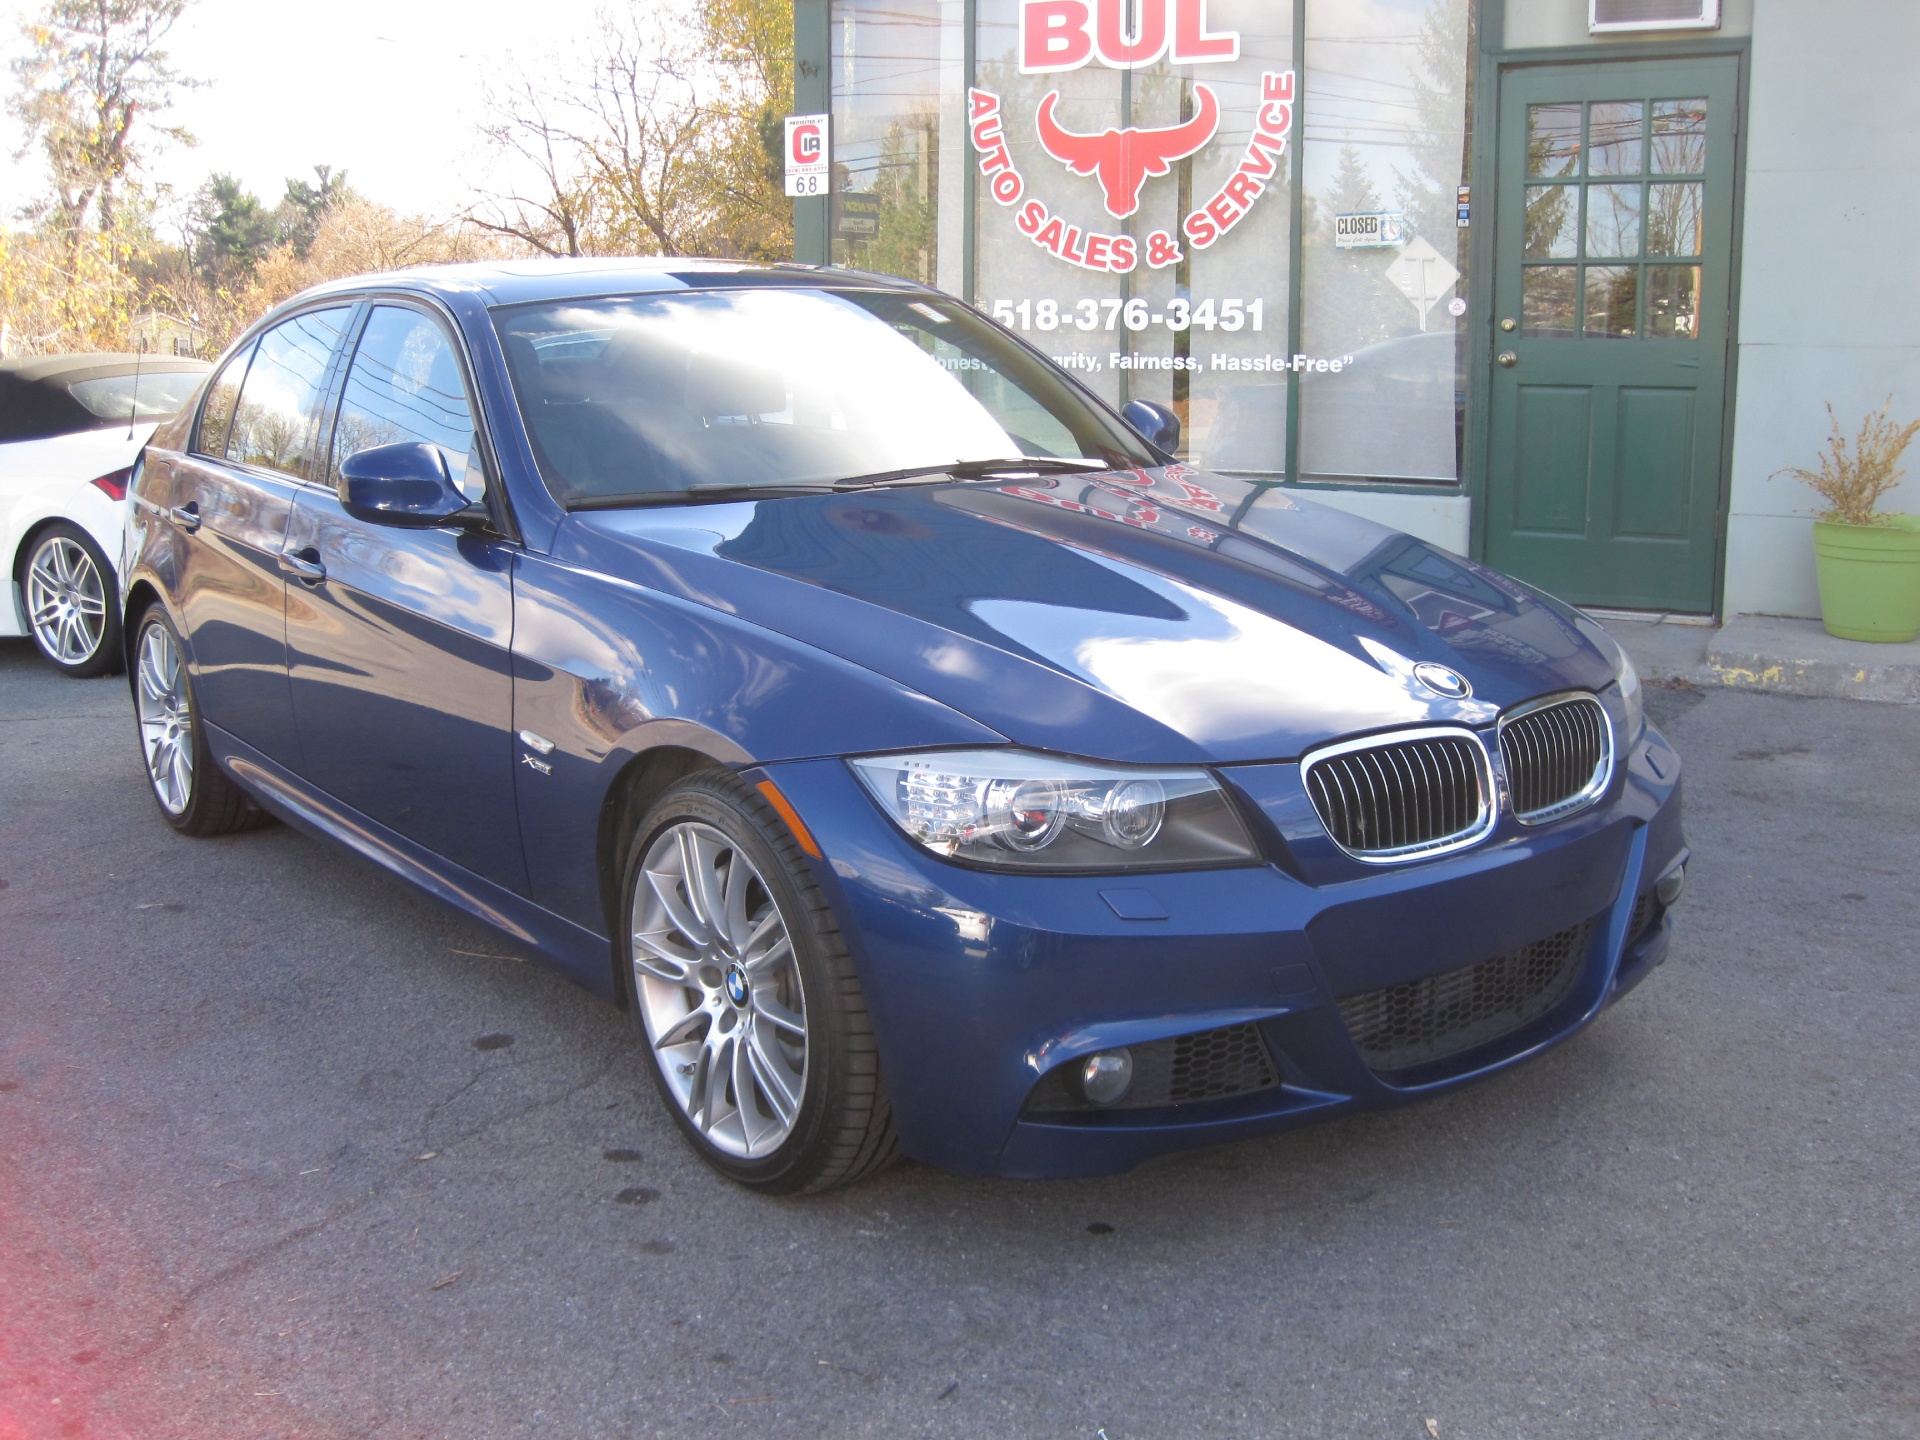 2010 BMW 3 Series For Sale $23990 | 15141 Bul Auto NY